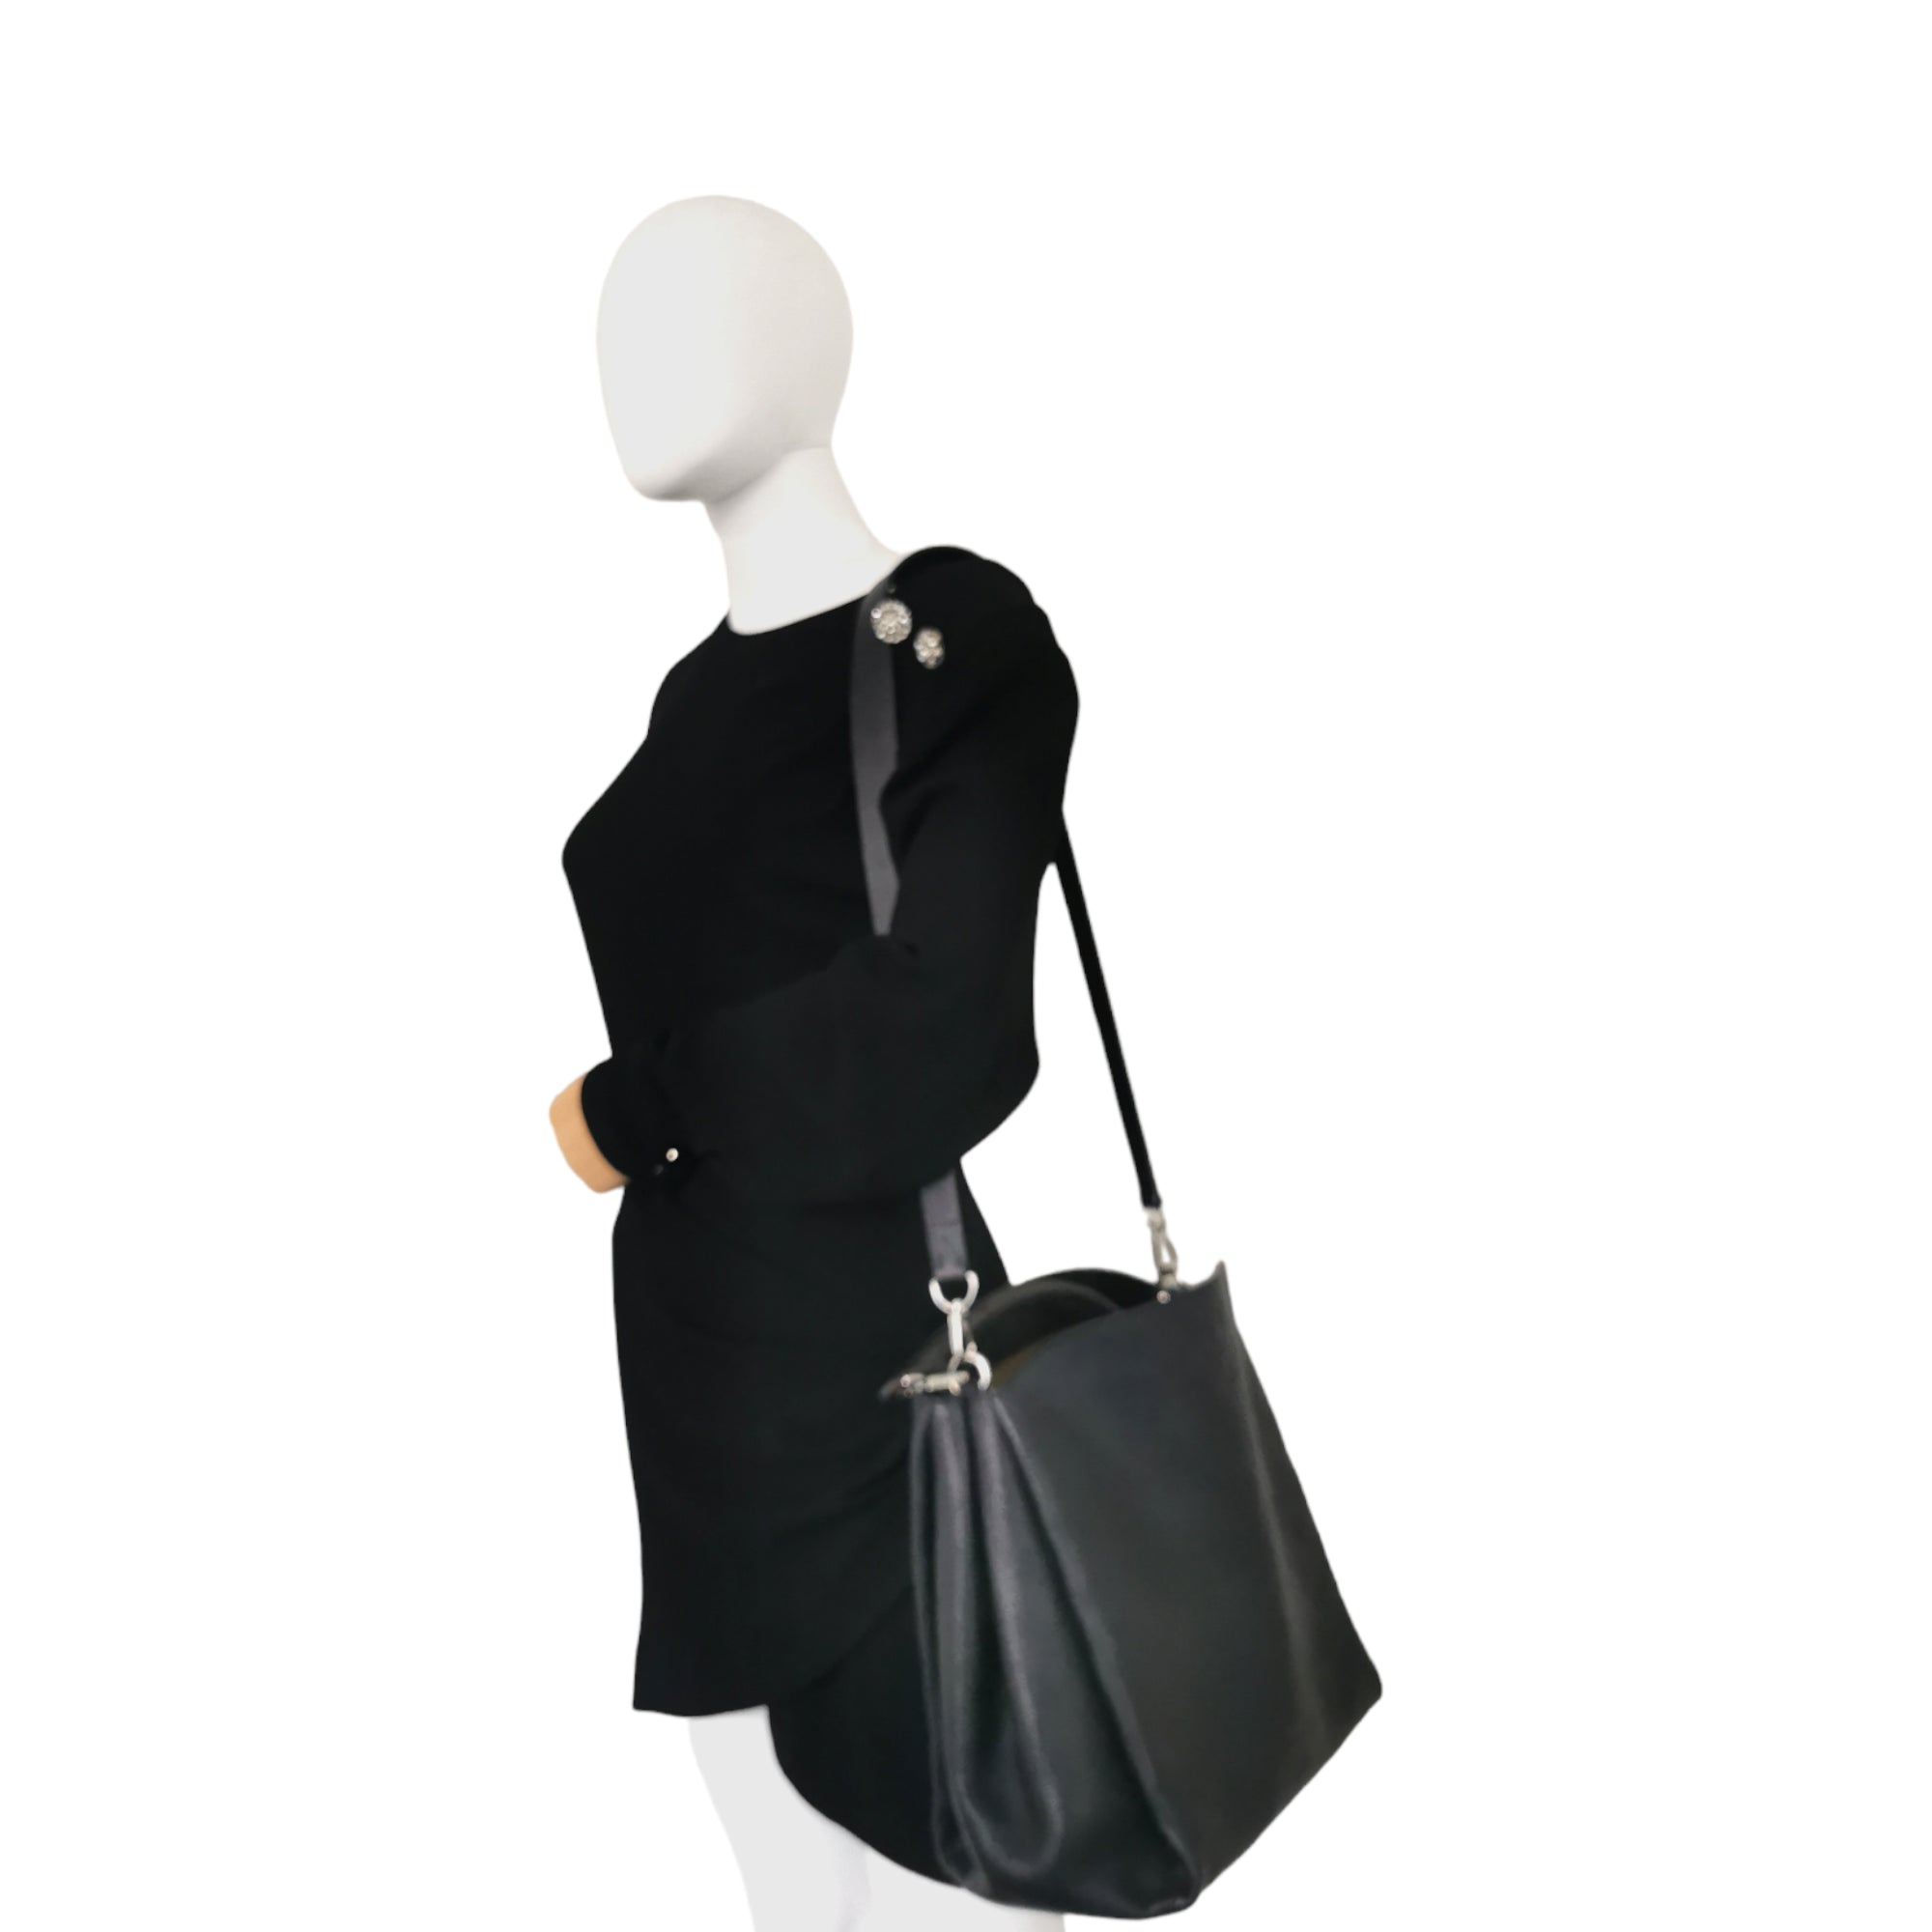 Louis Vuitton Black Monogram Mahina Leather Babylone PM Bag